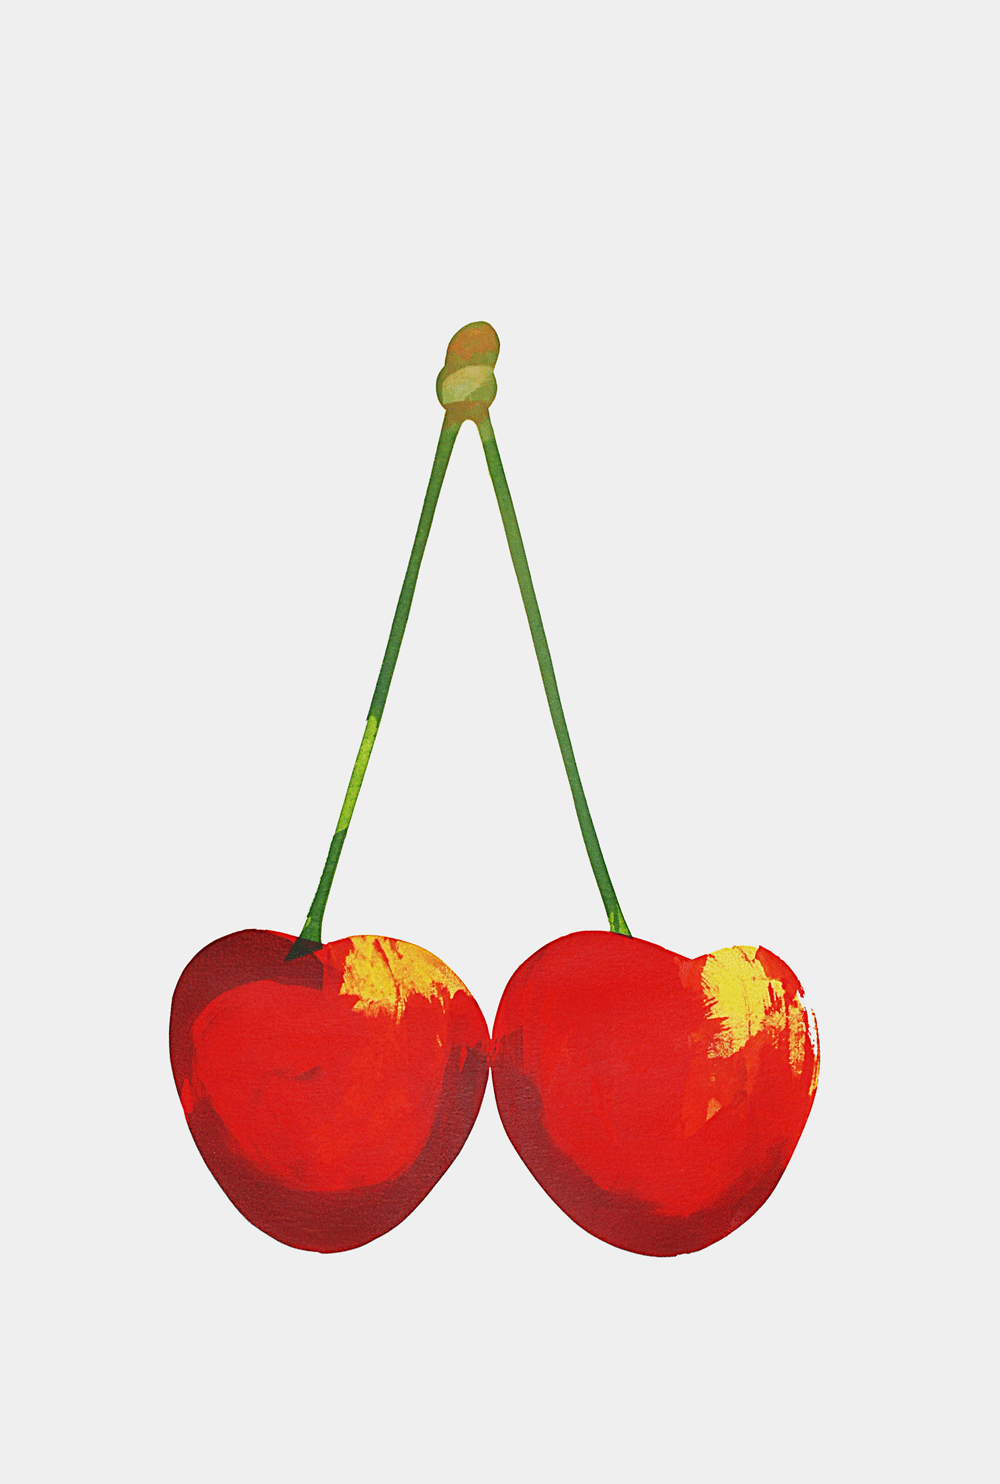  Cherry Red Monoprint | 500 x 705mm 